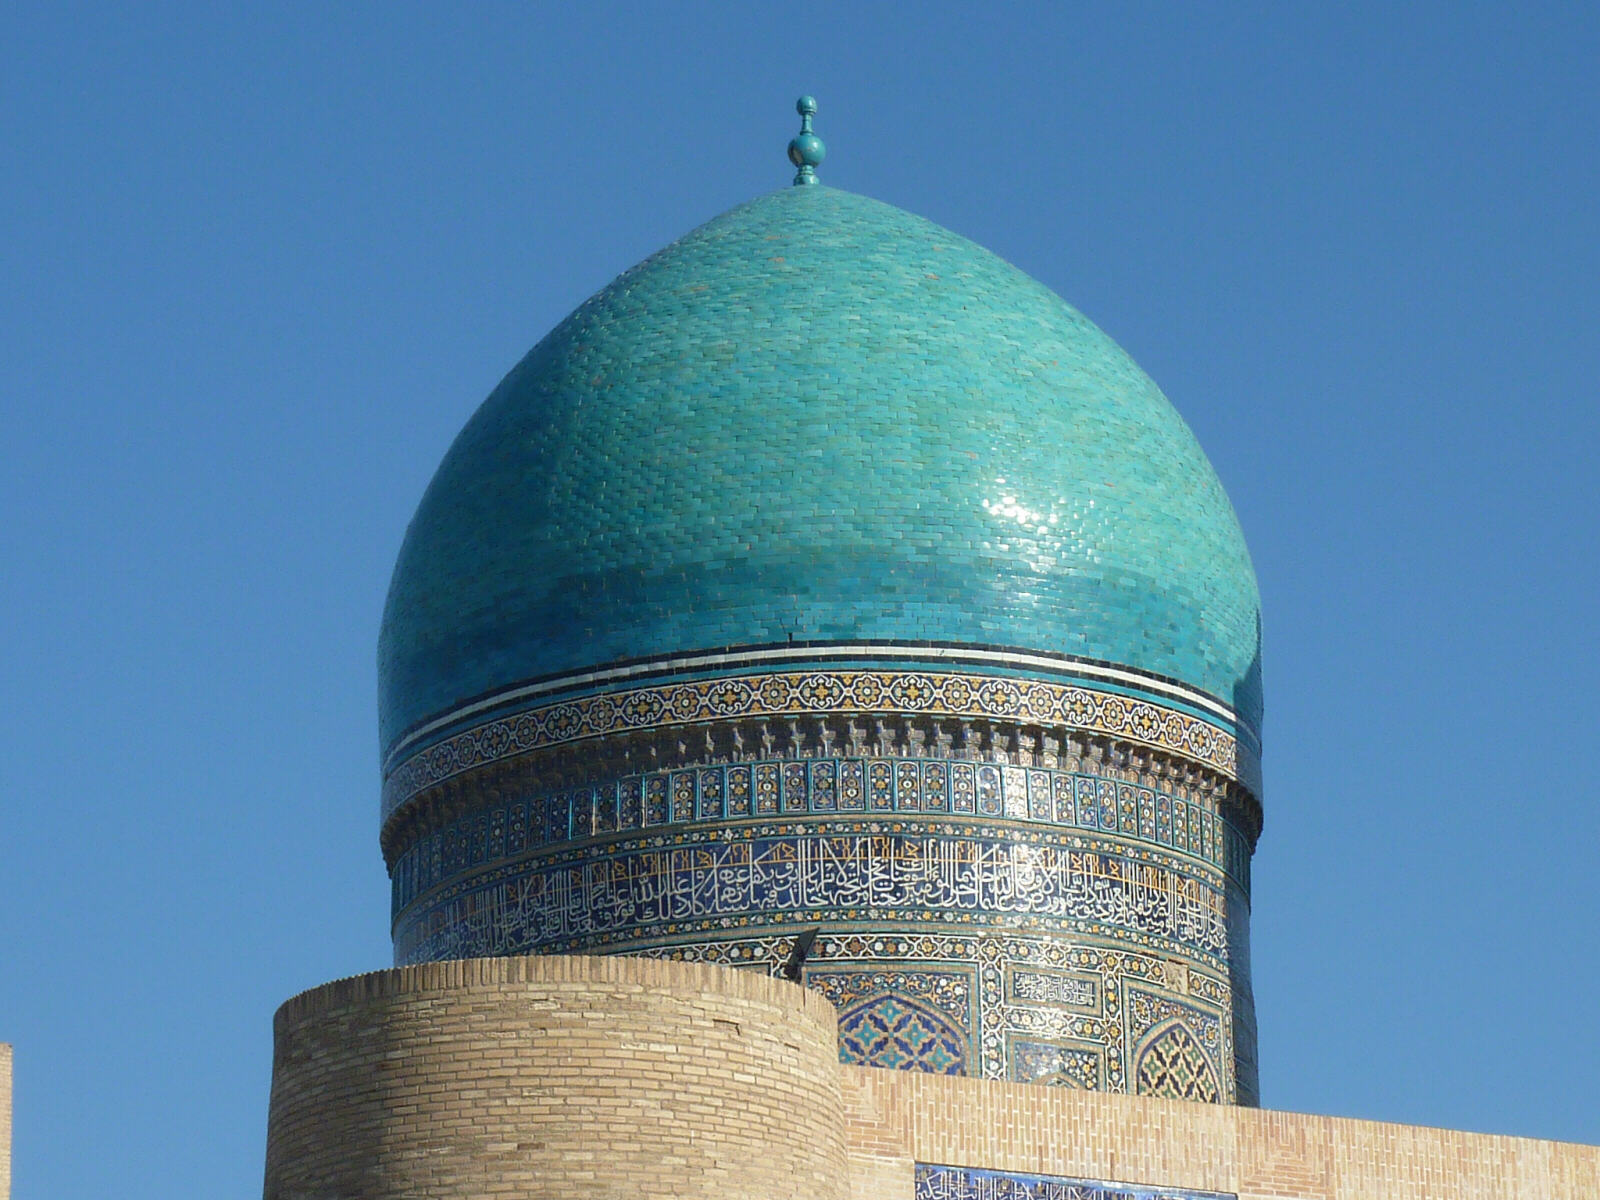 The dome of the Mir-i-Arab madrassa in Bukhara, Uzbekistan